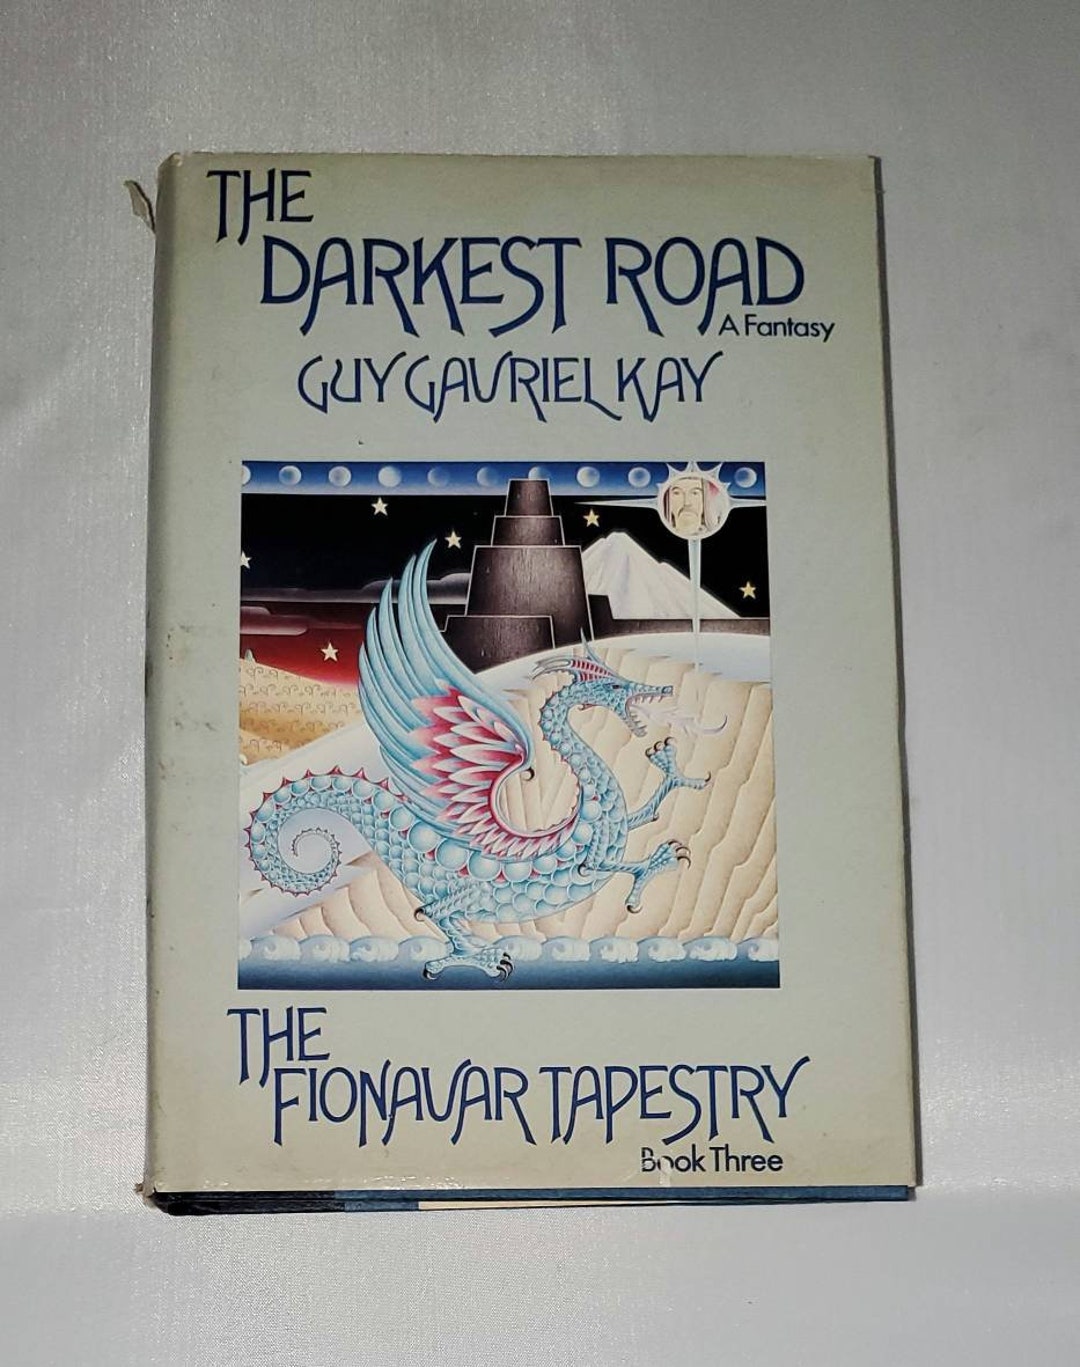 Darkest　the　The　Gavriel　Tapestry　Road　by　Guy　Fionavar　Book　Etsy